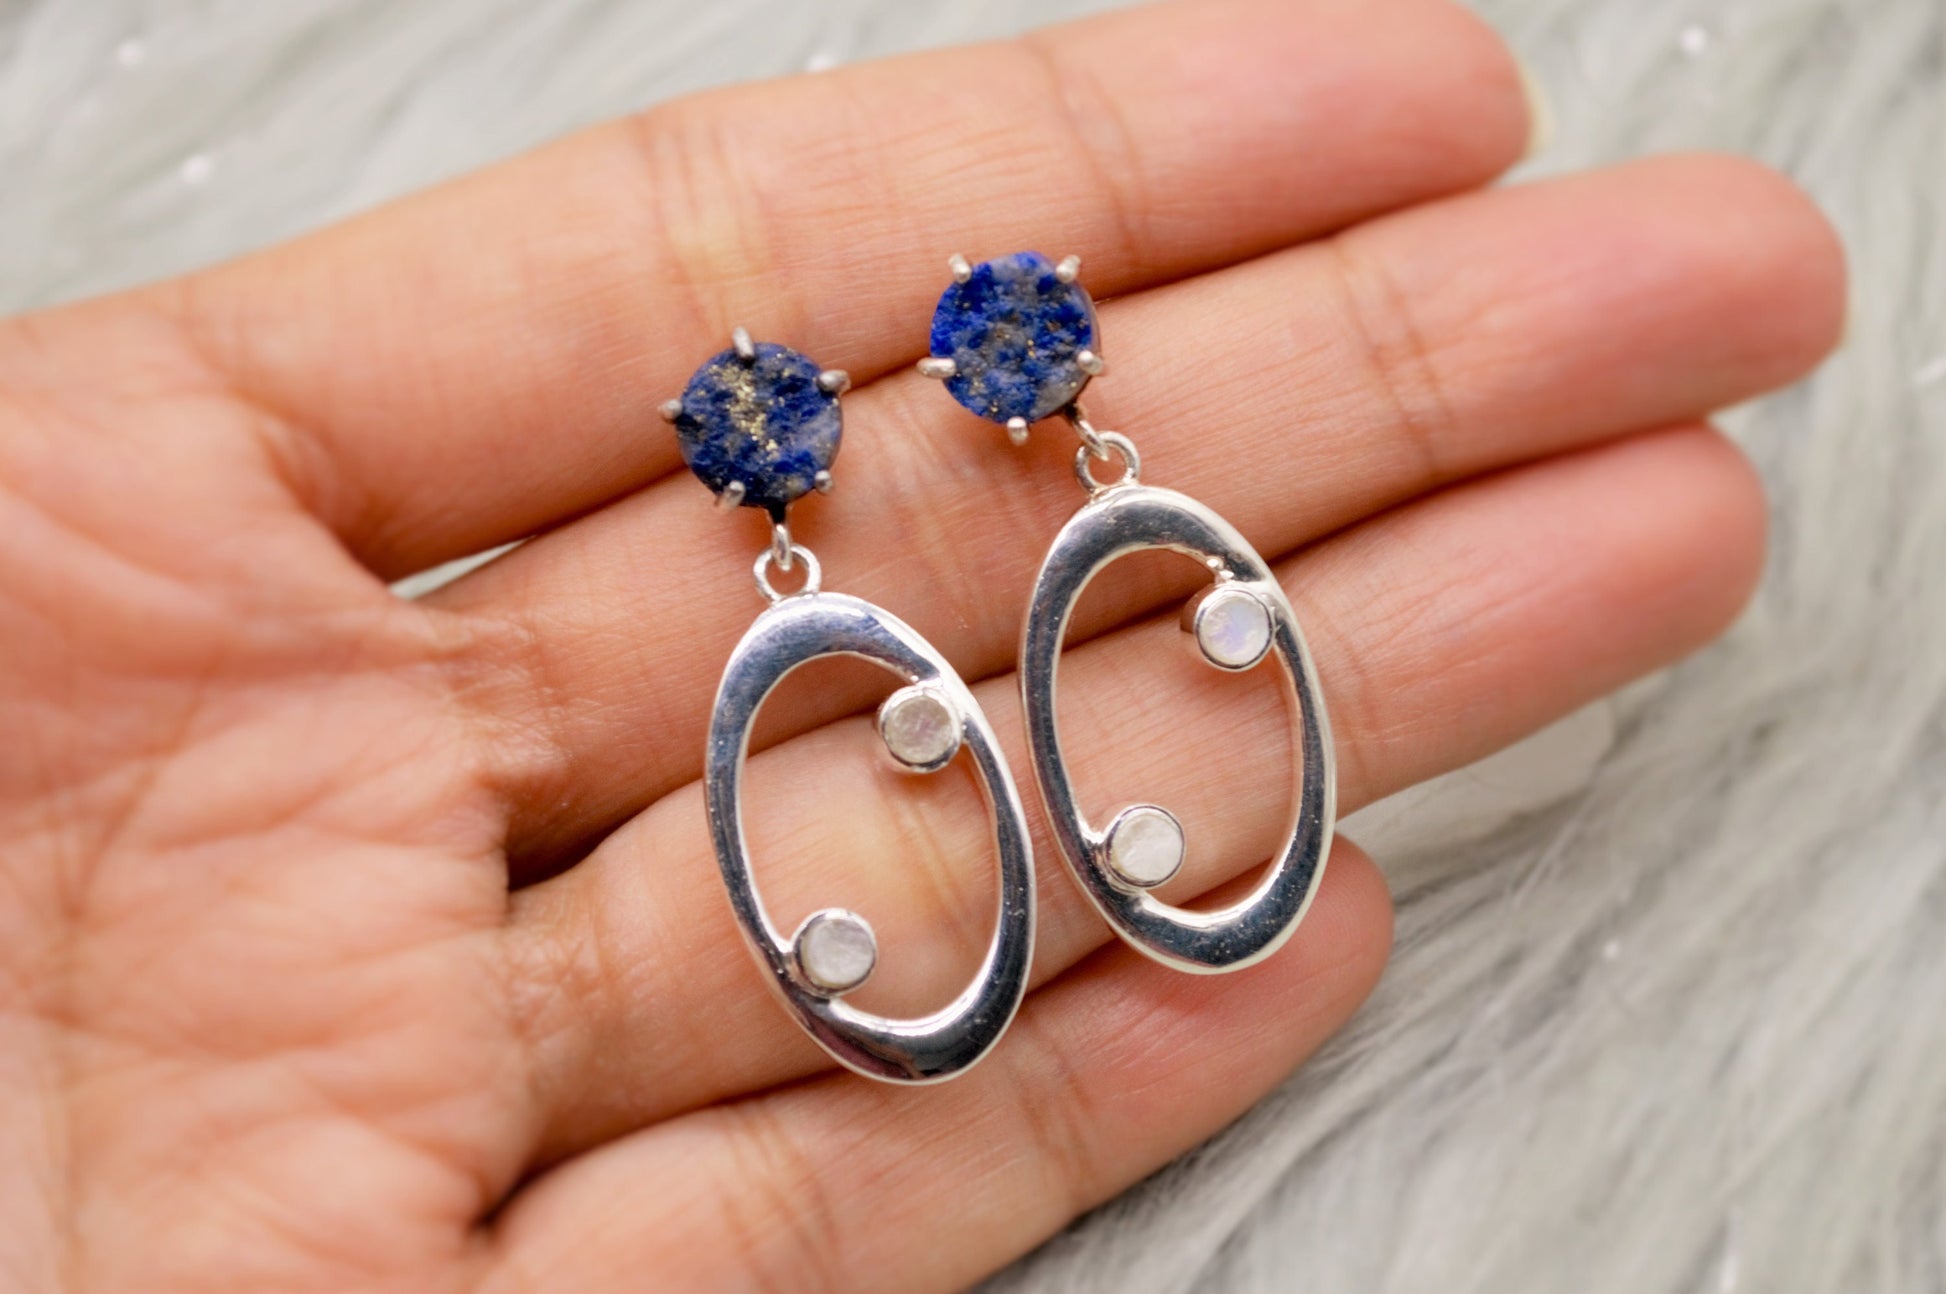 Lapis Lazuli, Moonstone Silver Earrings, June Birthstone, December Birthstone, Minimalist Blue Earrings, Sterling Silver Drop Earrings